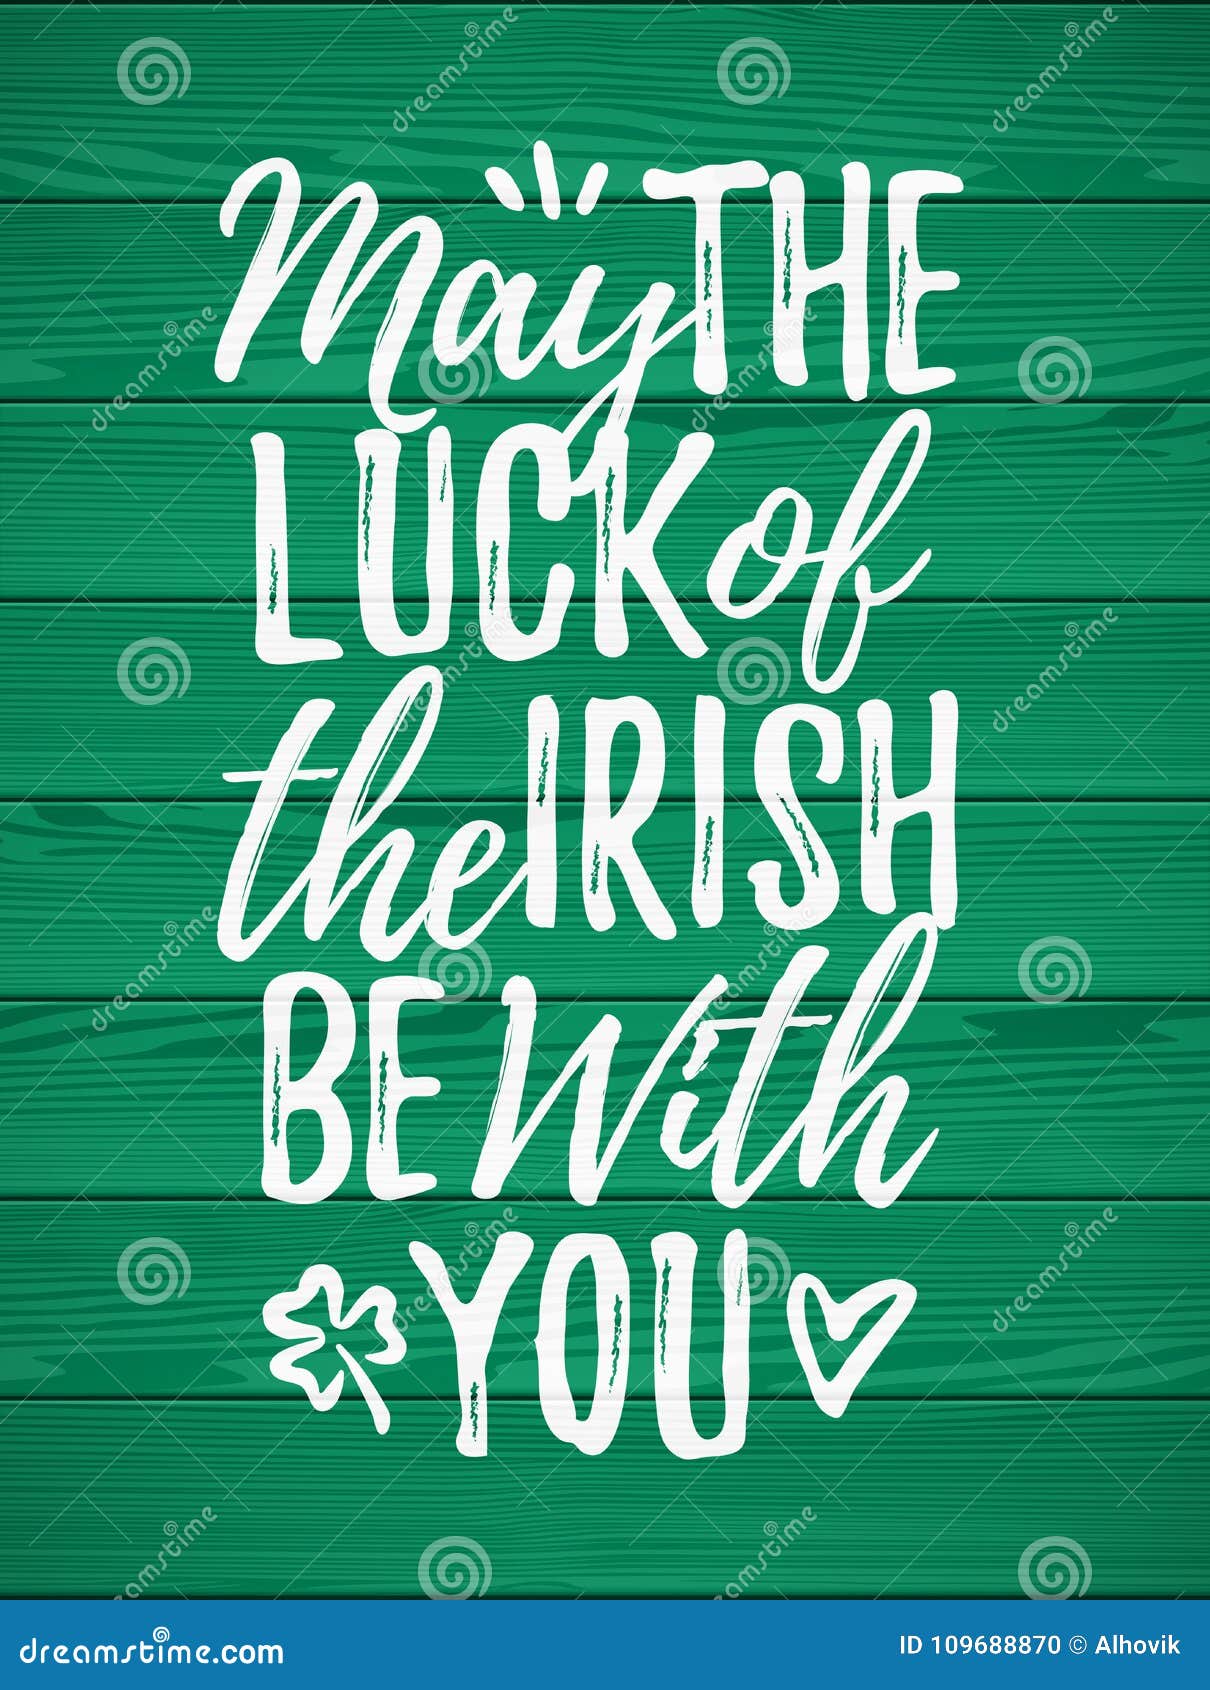 https://thumbs.dreamstime.com/z/may-luck-irish-be-you-may-luck-irish-be-you-handdrawn-dry-brush-style-lettering-green-wooden-109688870.jpg